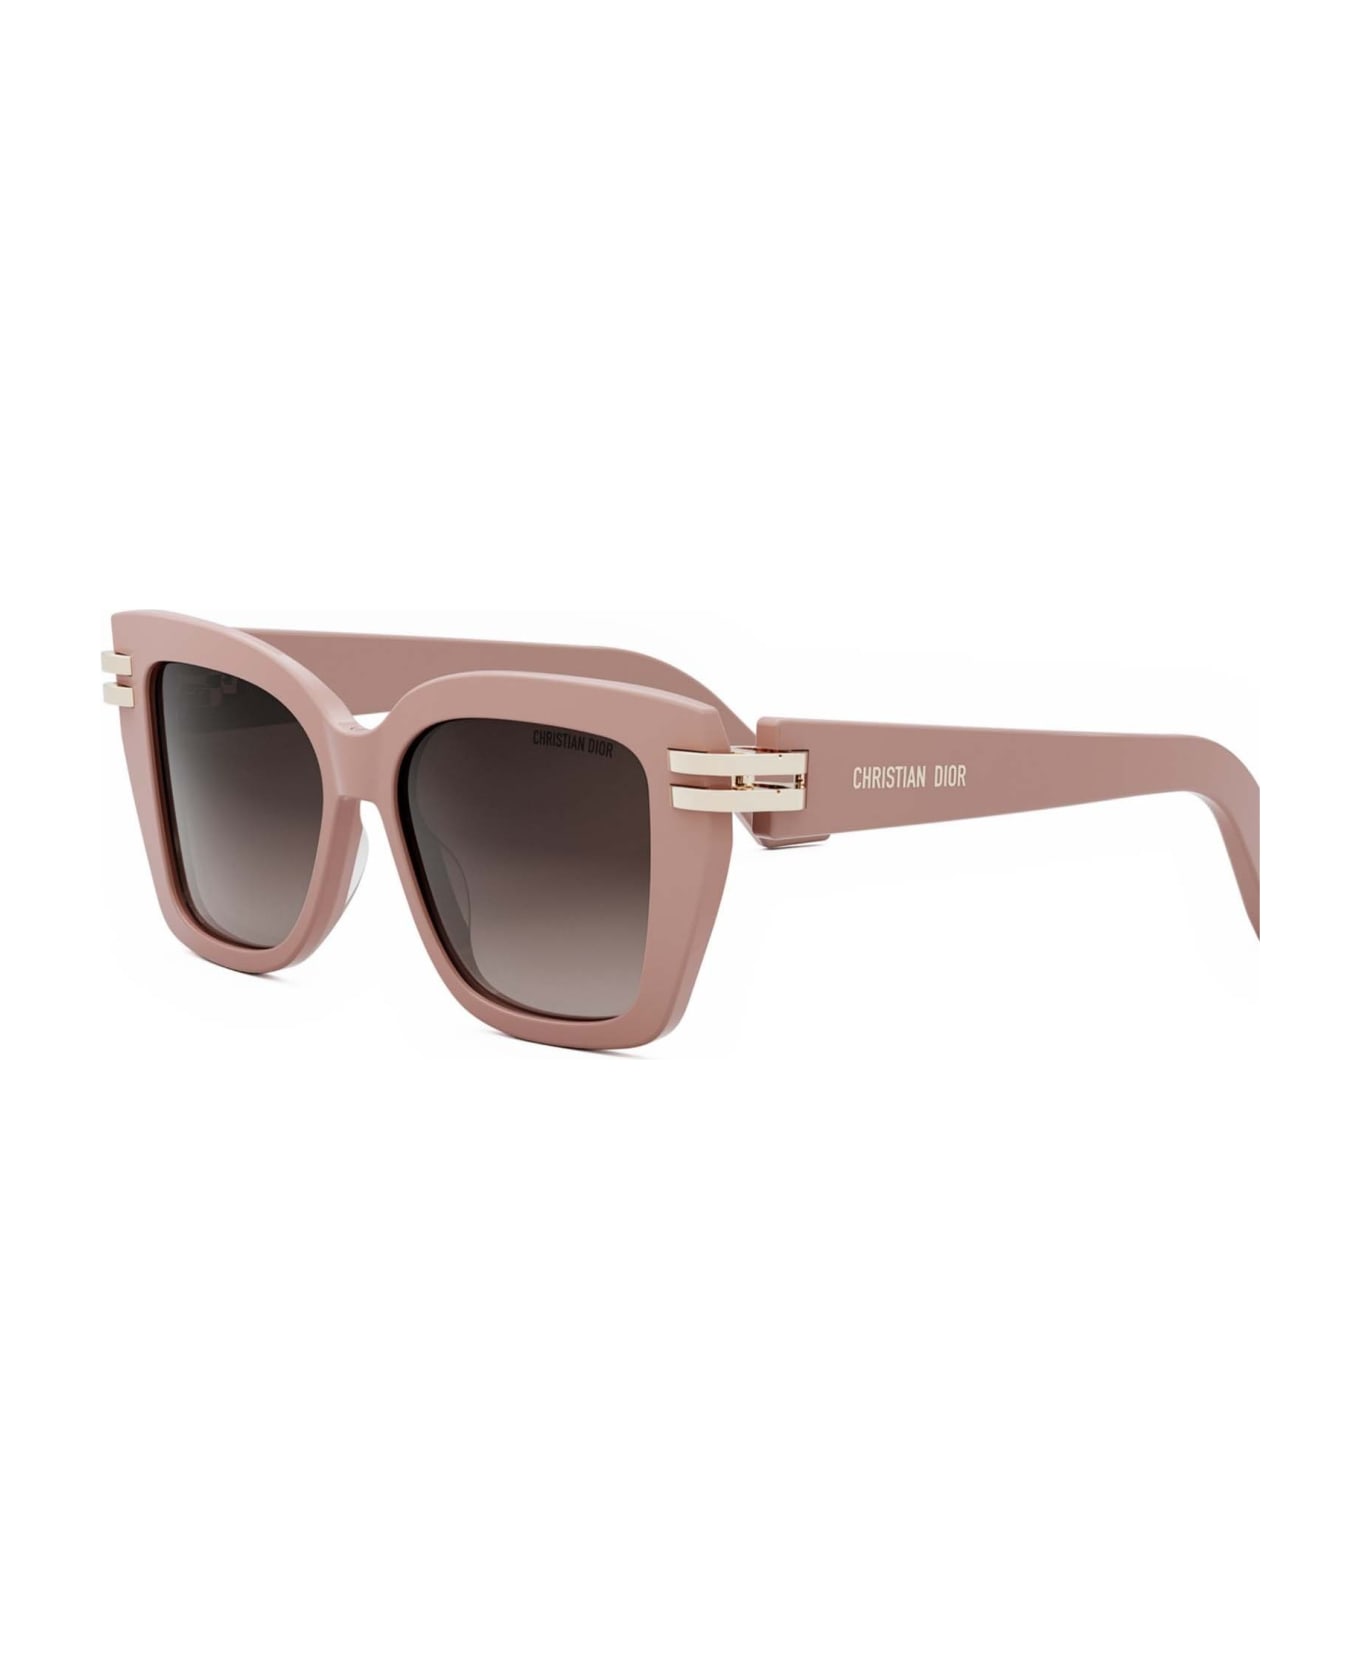 Dior Eyewear Sunglasses - Rosa/Marrone sfumato サングラス